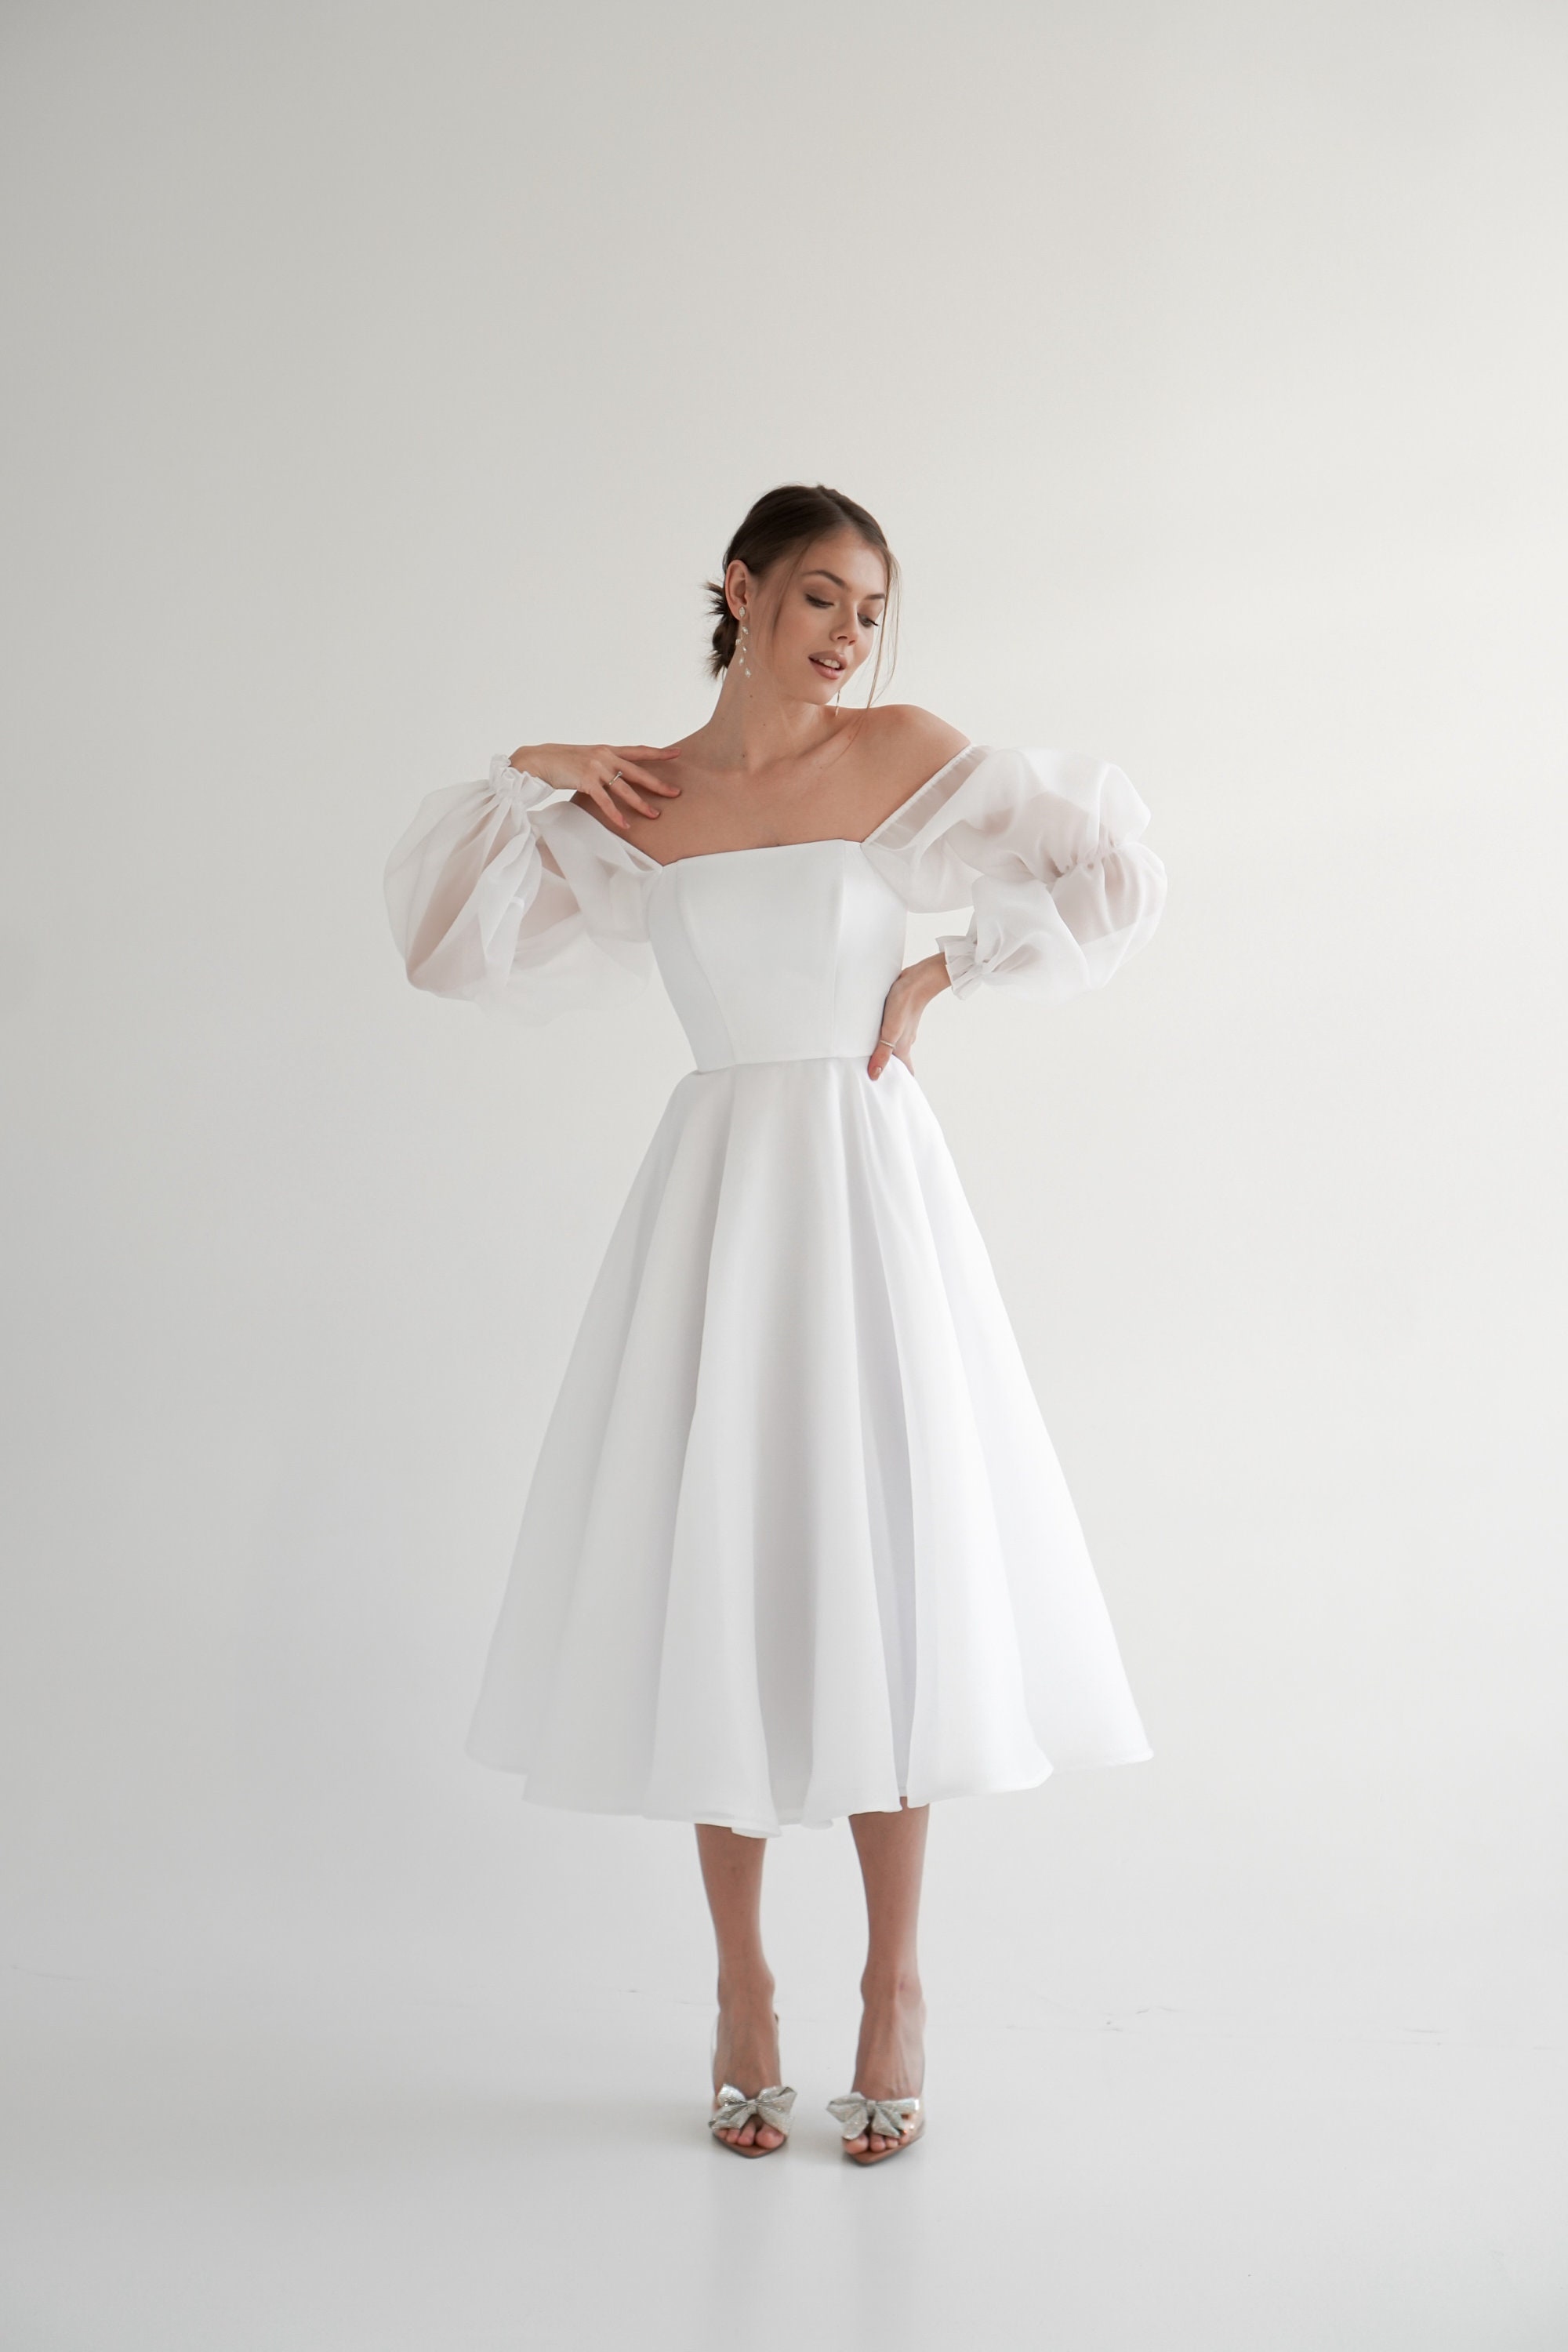 Short Sleeve Floral Lace Flowy Organza Skirt A-line Wedding Dress